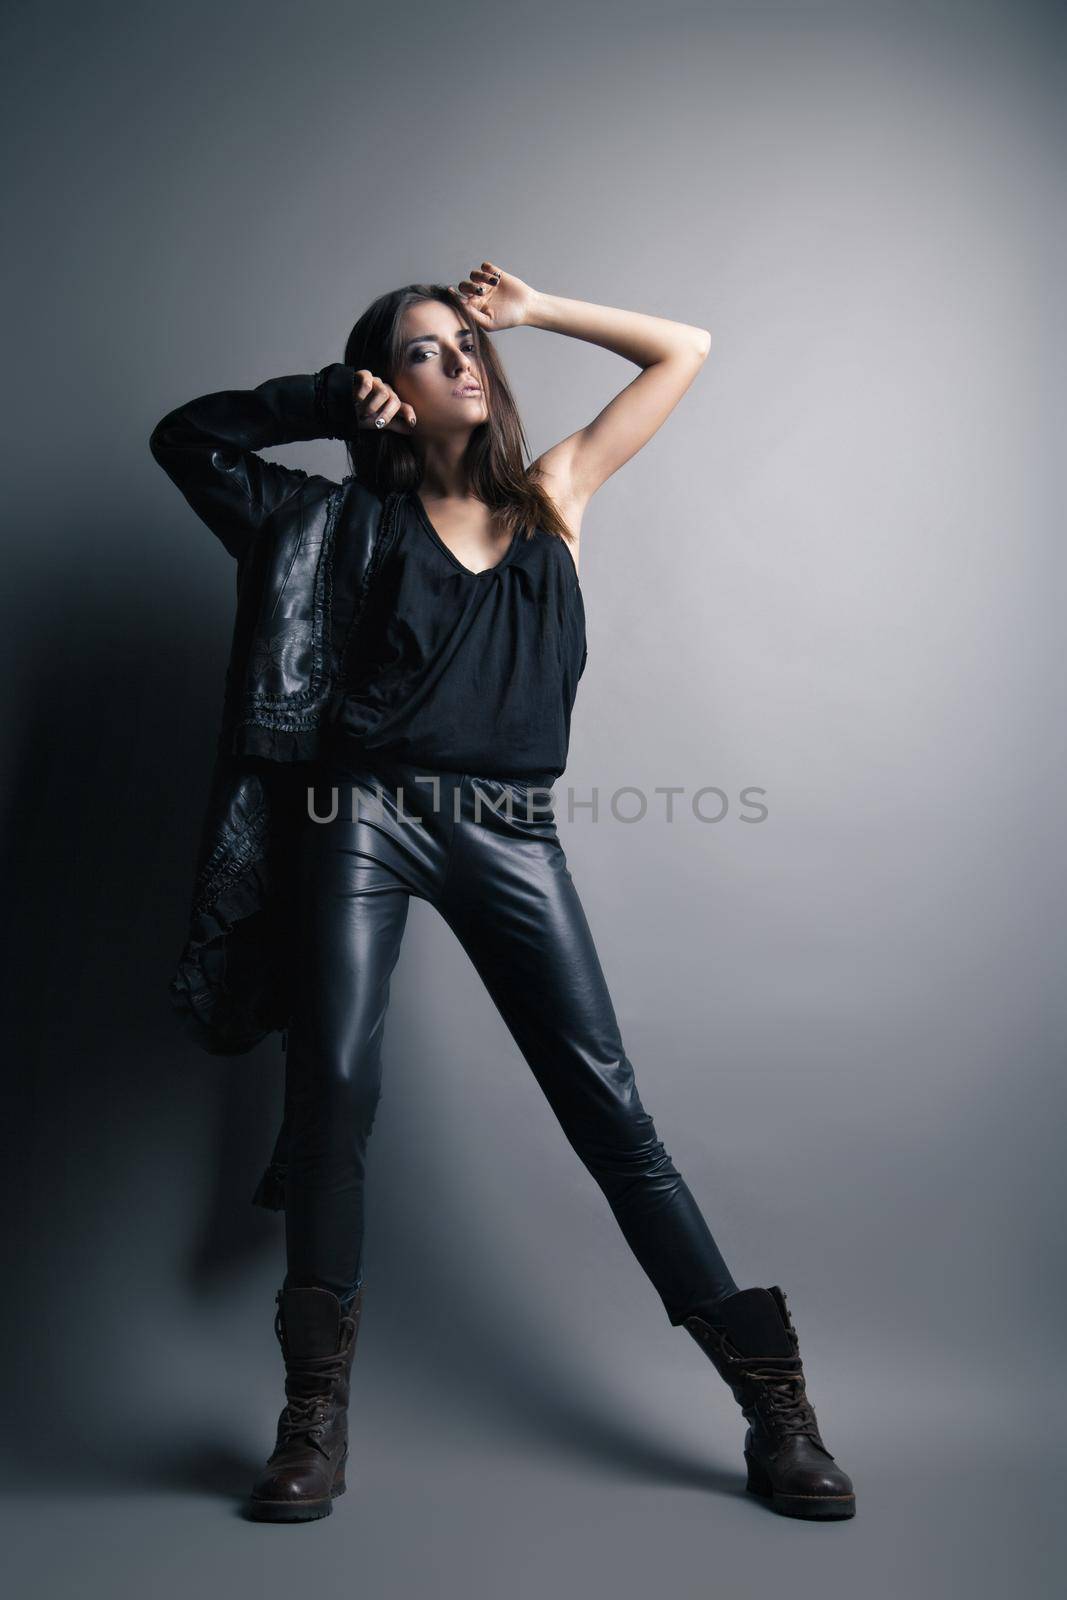 Fashion model wearing leather pants and jacket posing on grey background